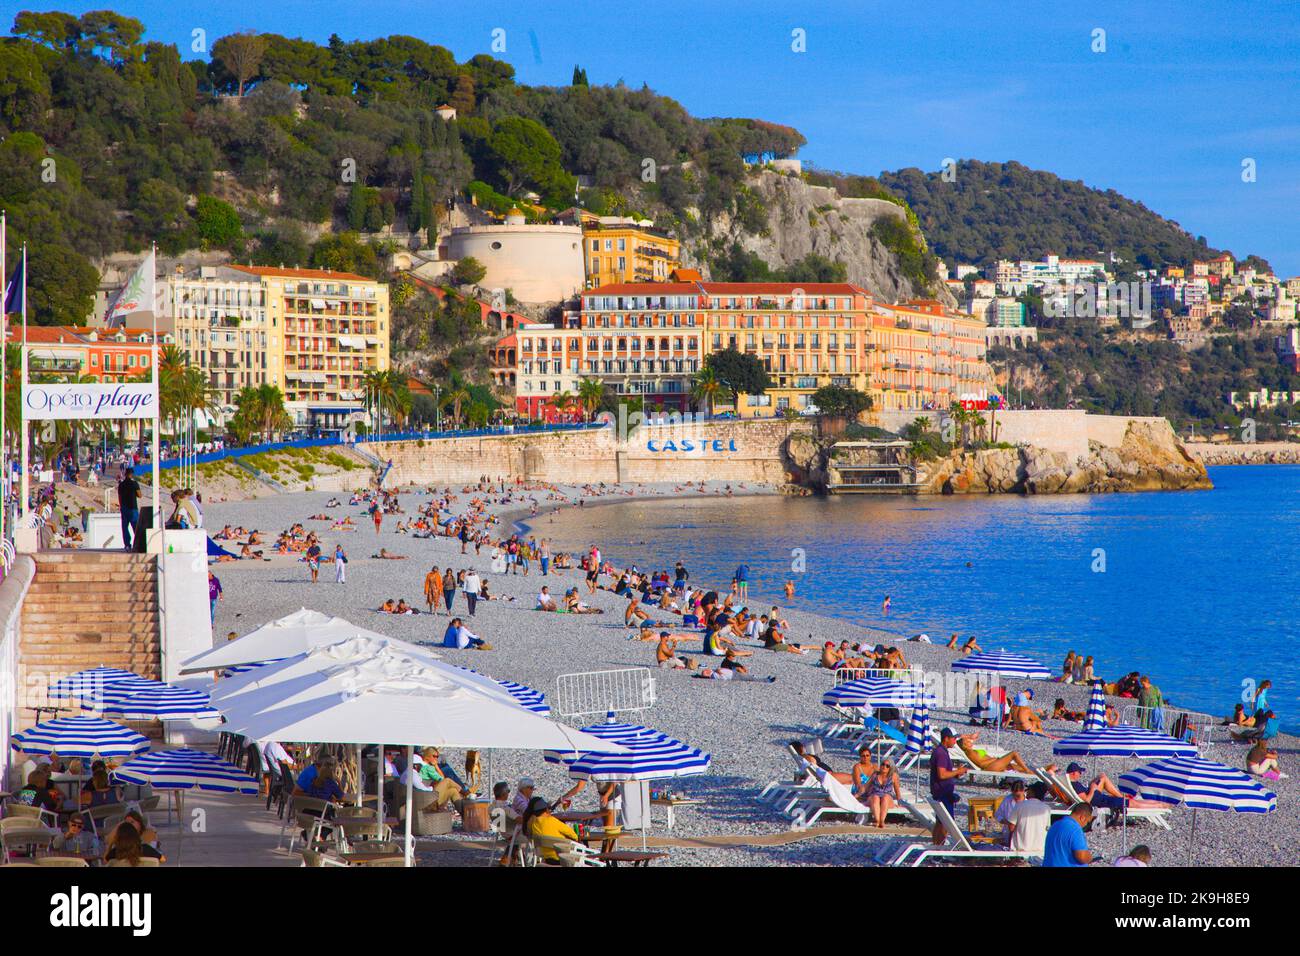 France, Cote d'Azur, Nice, Opera Plage, beach, people, Stock Photo